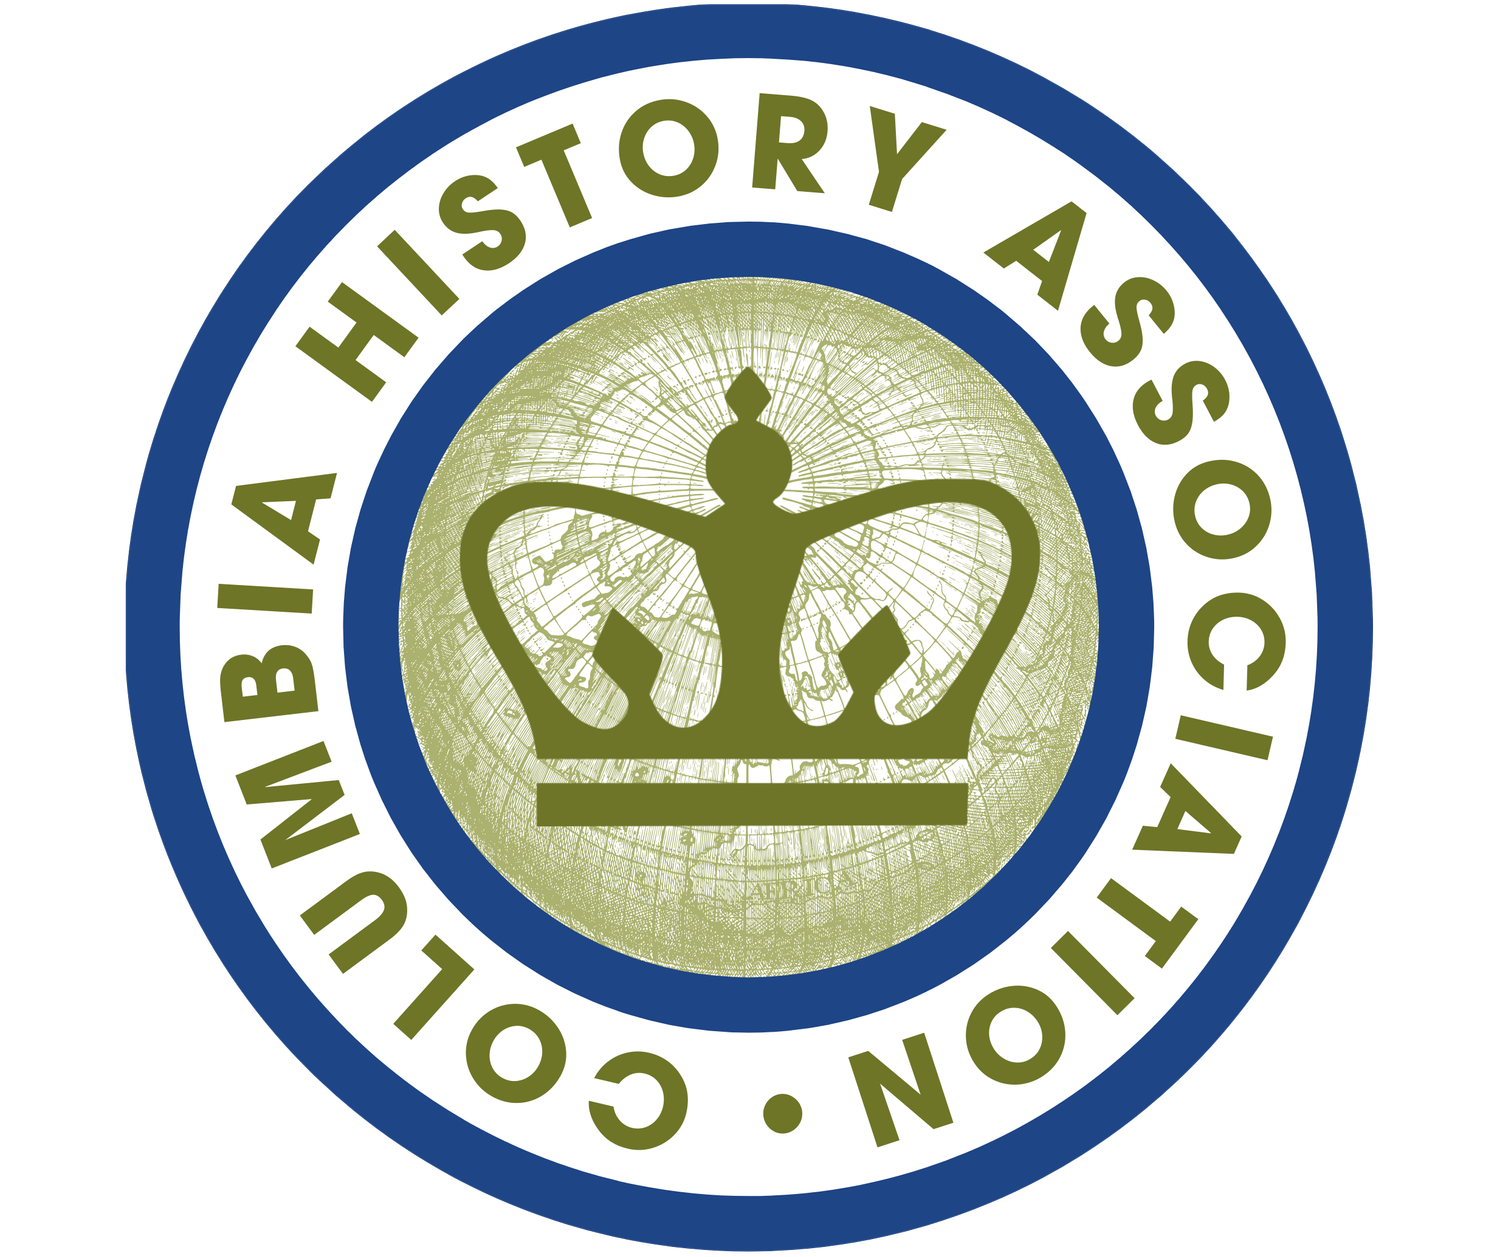 Columbia History Association